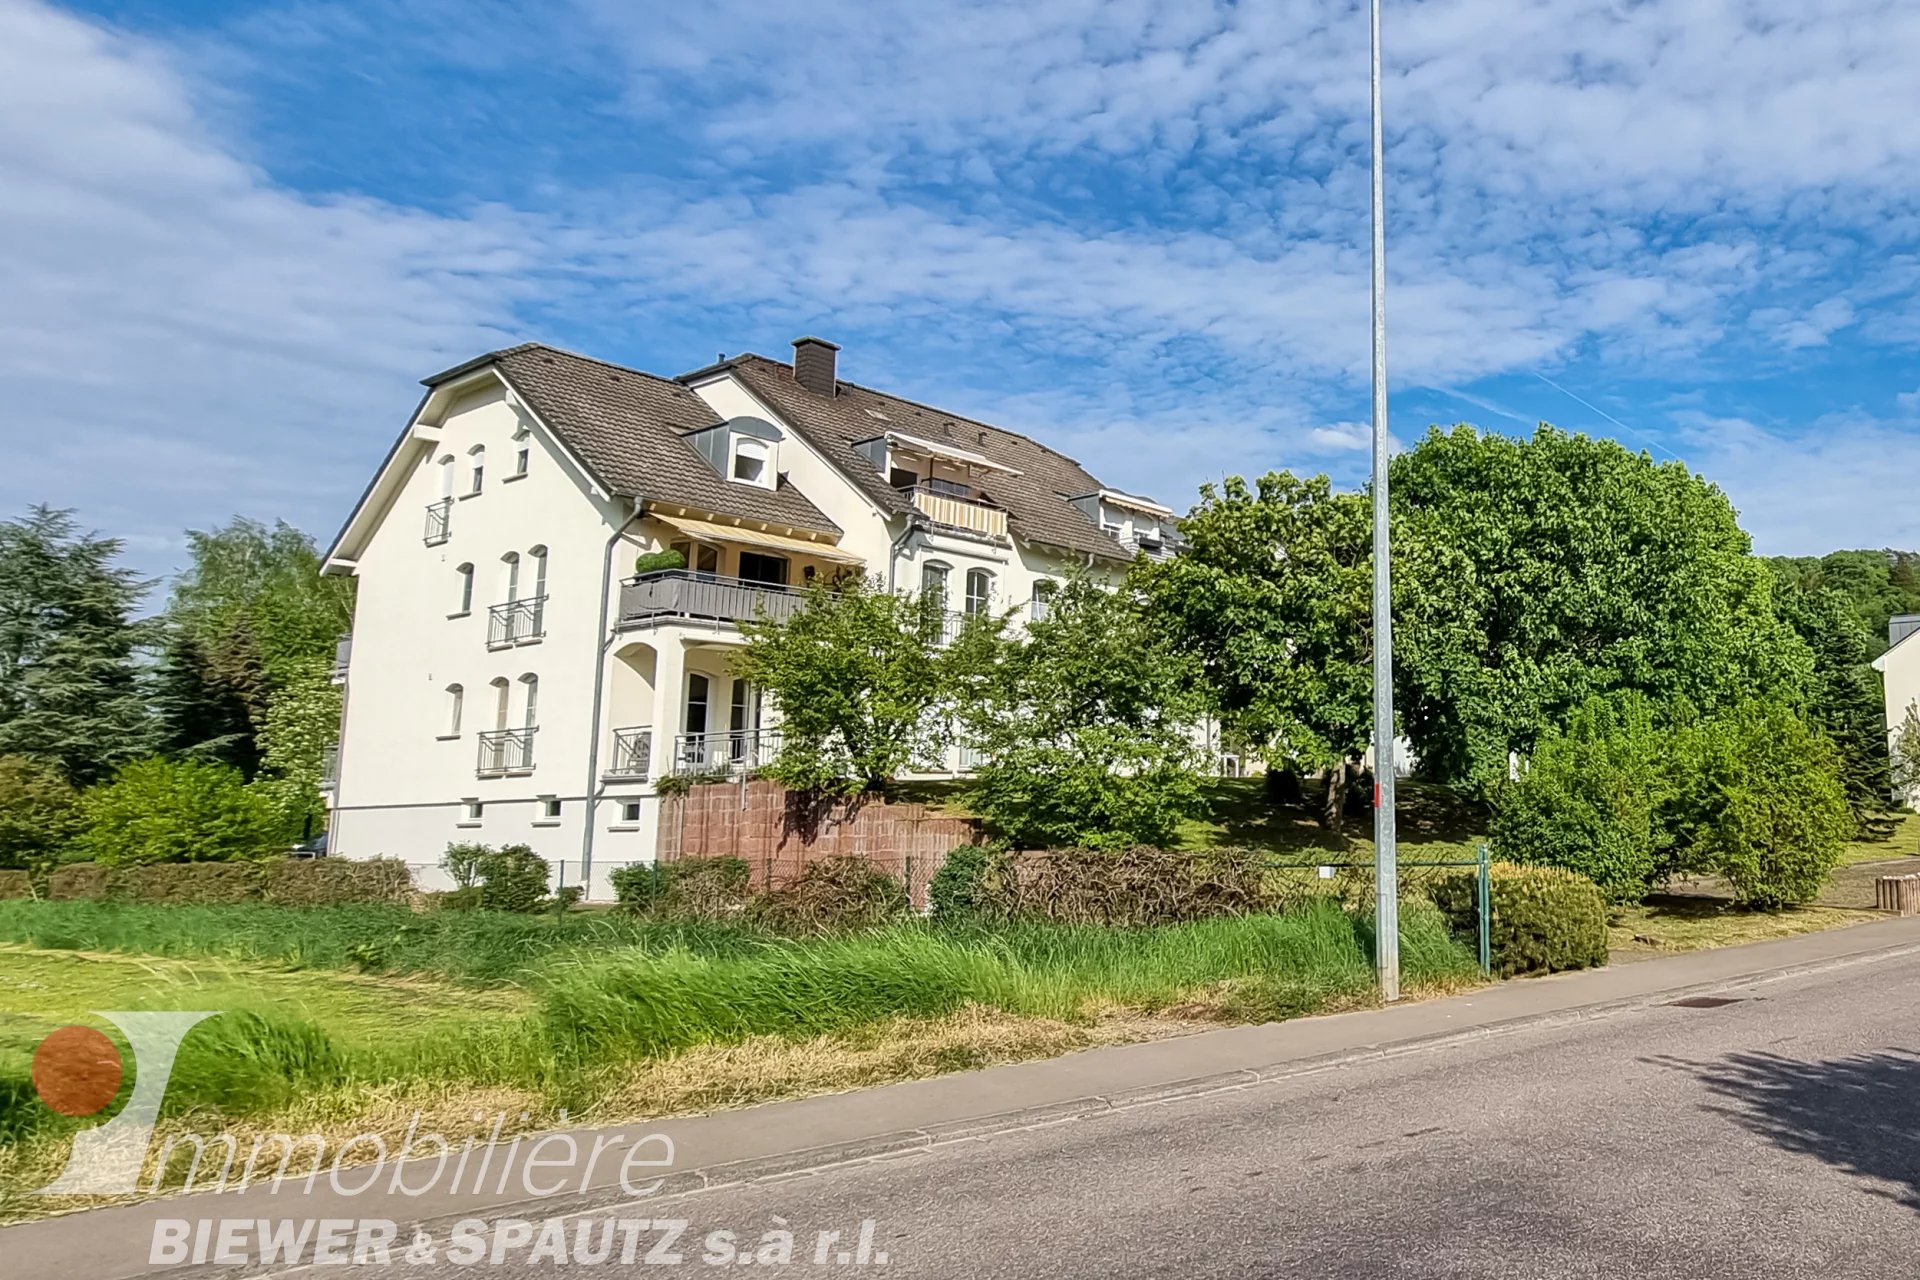 FOR RENT - apartment with 1 bedroom in Echternach